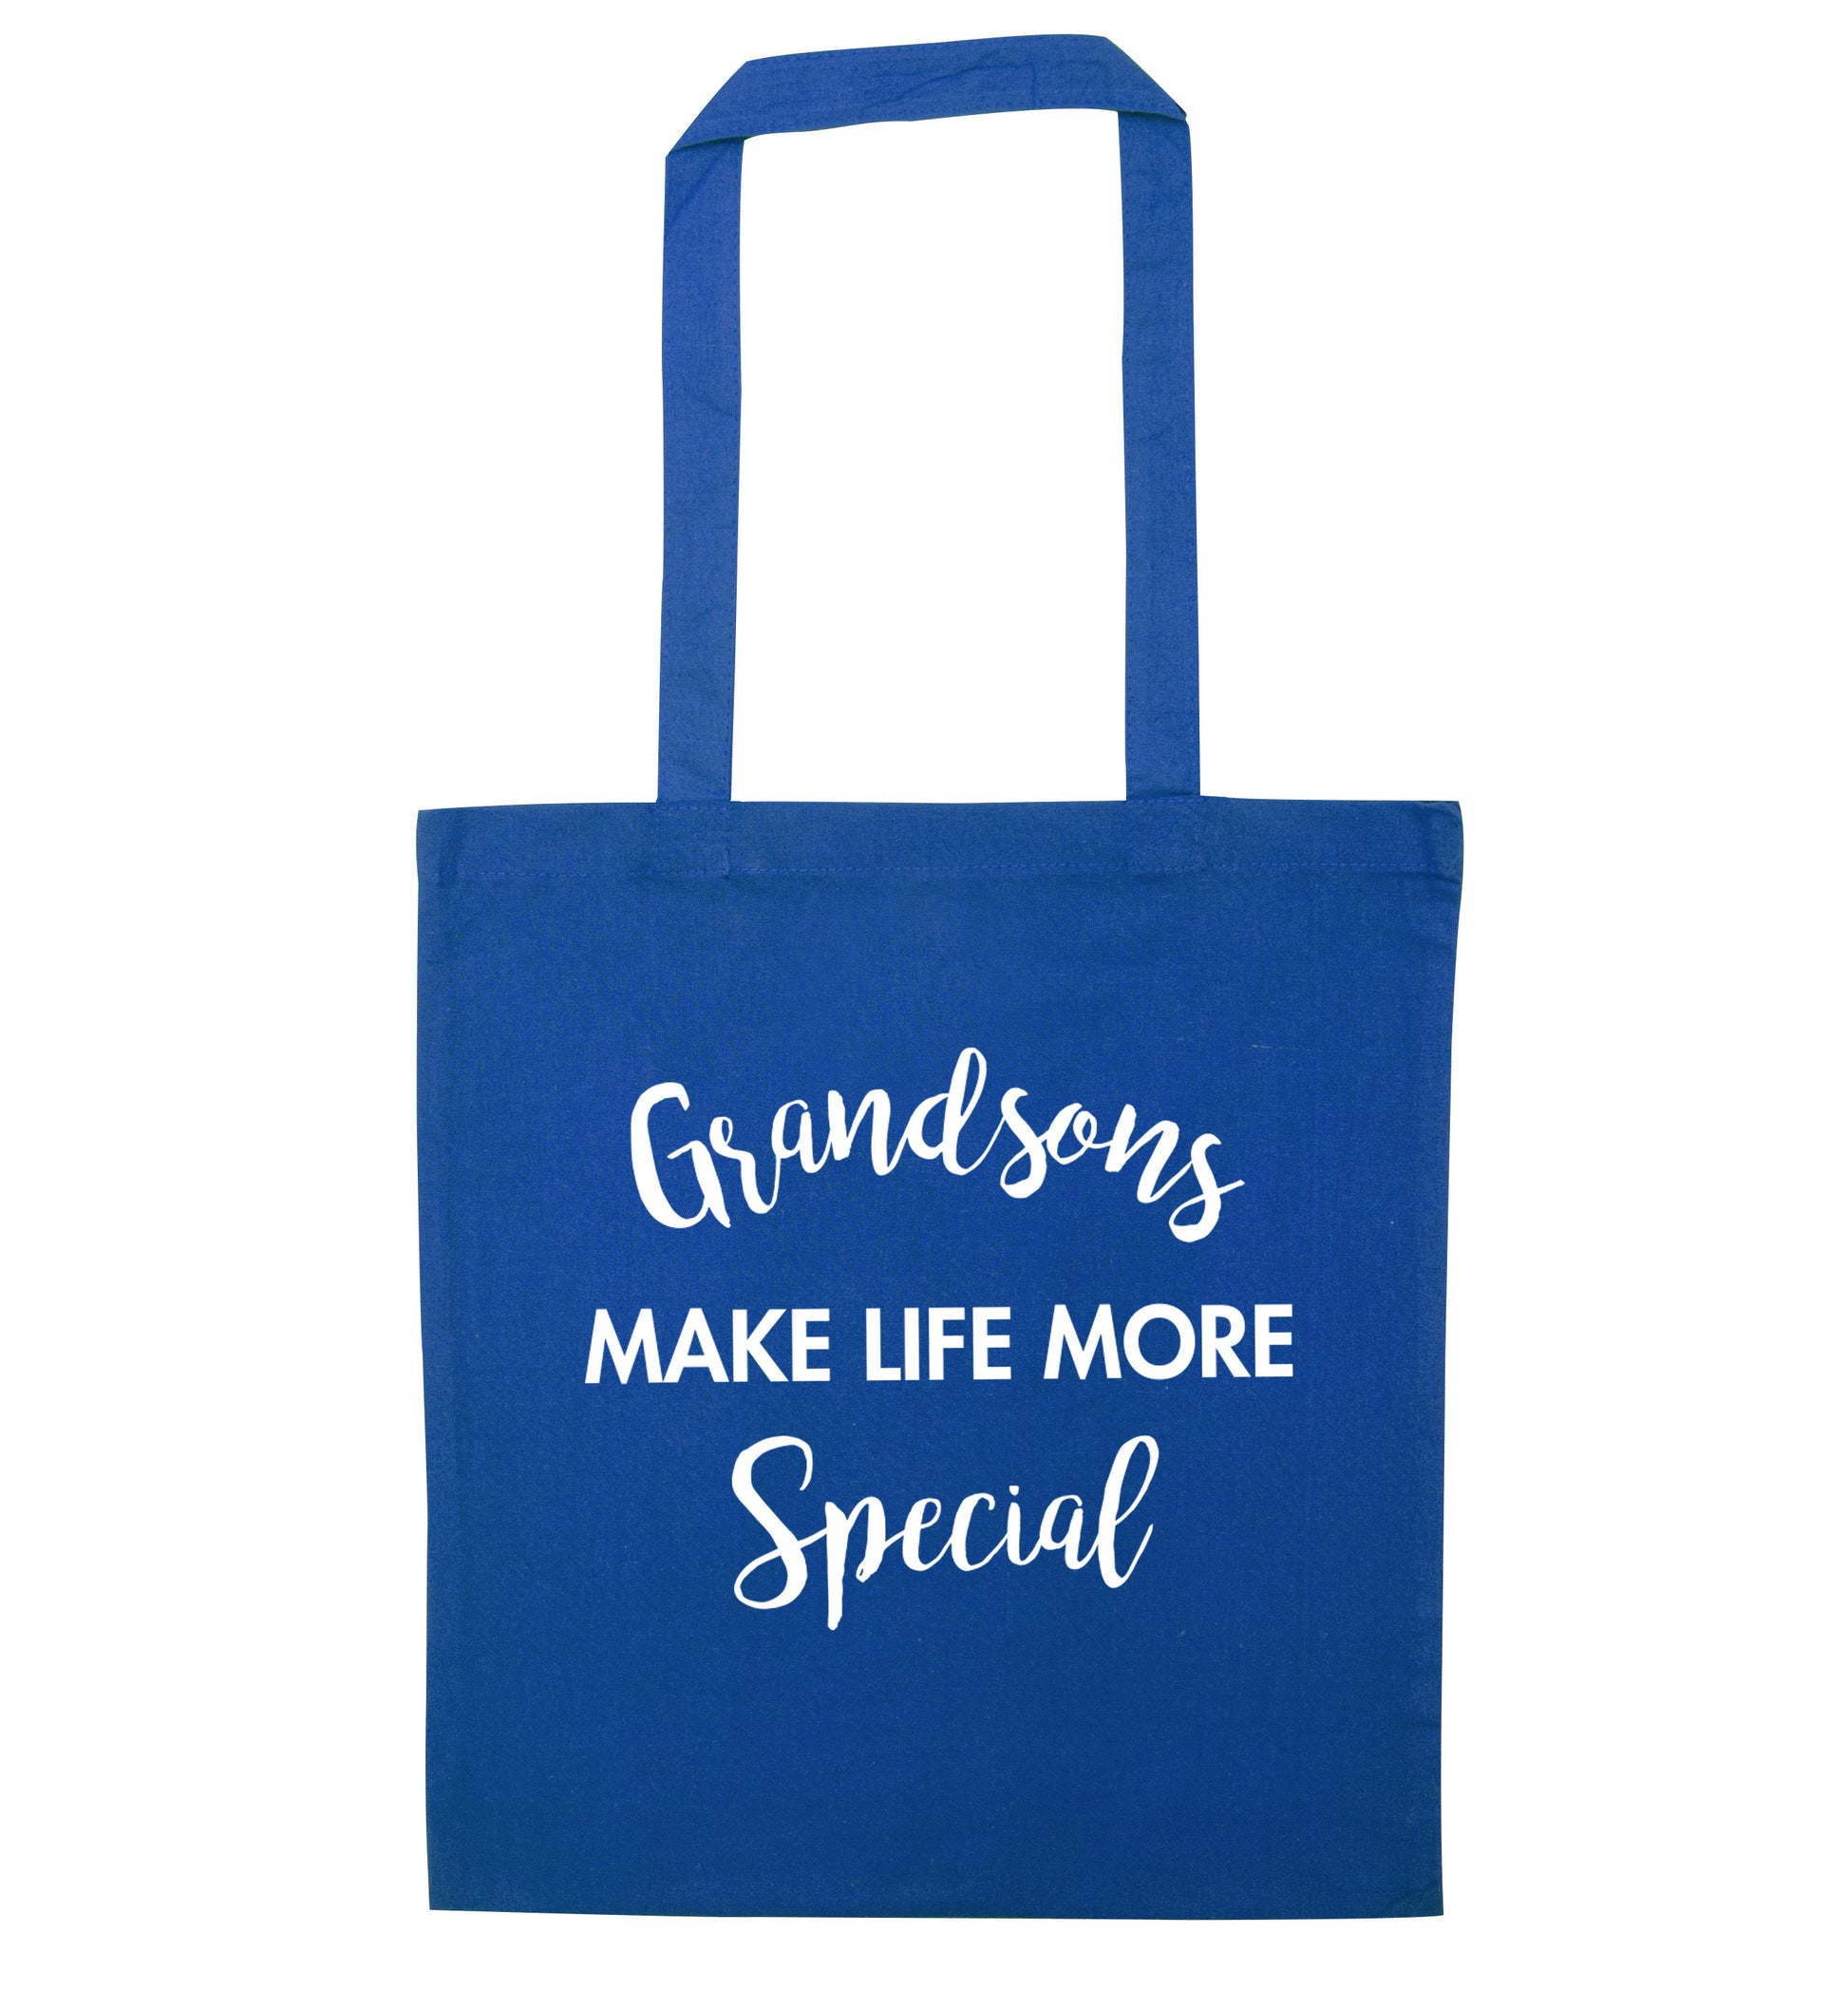 Grandsons make life more special blue tote bag